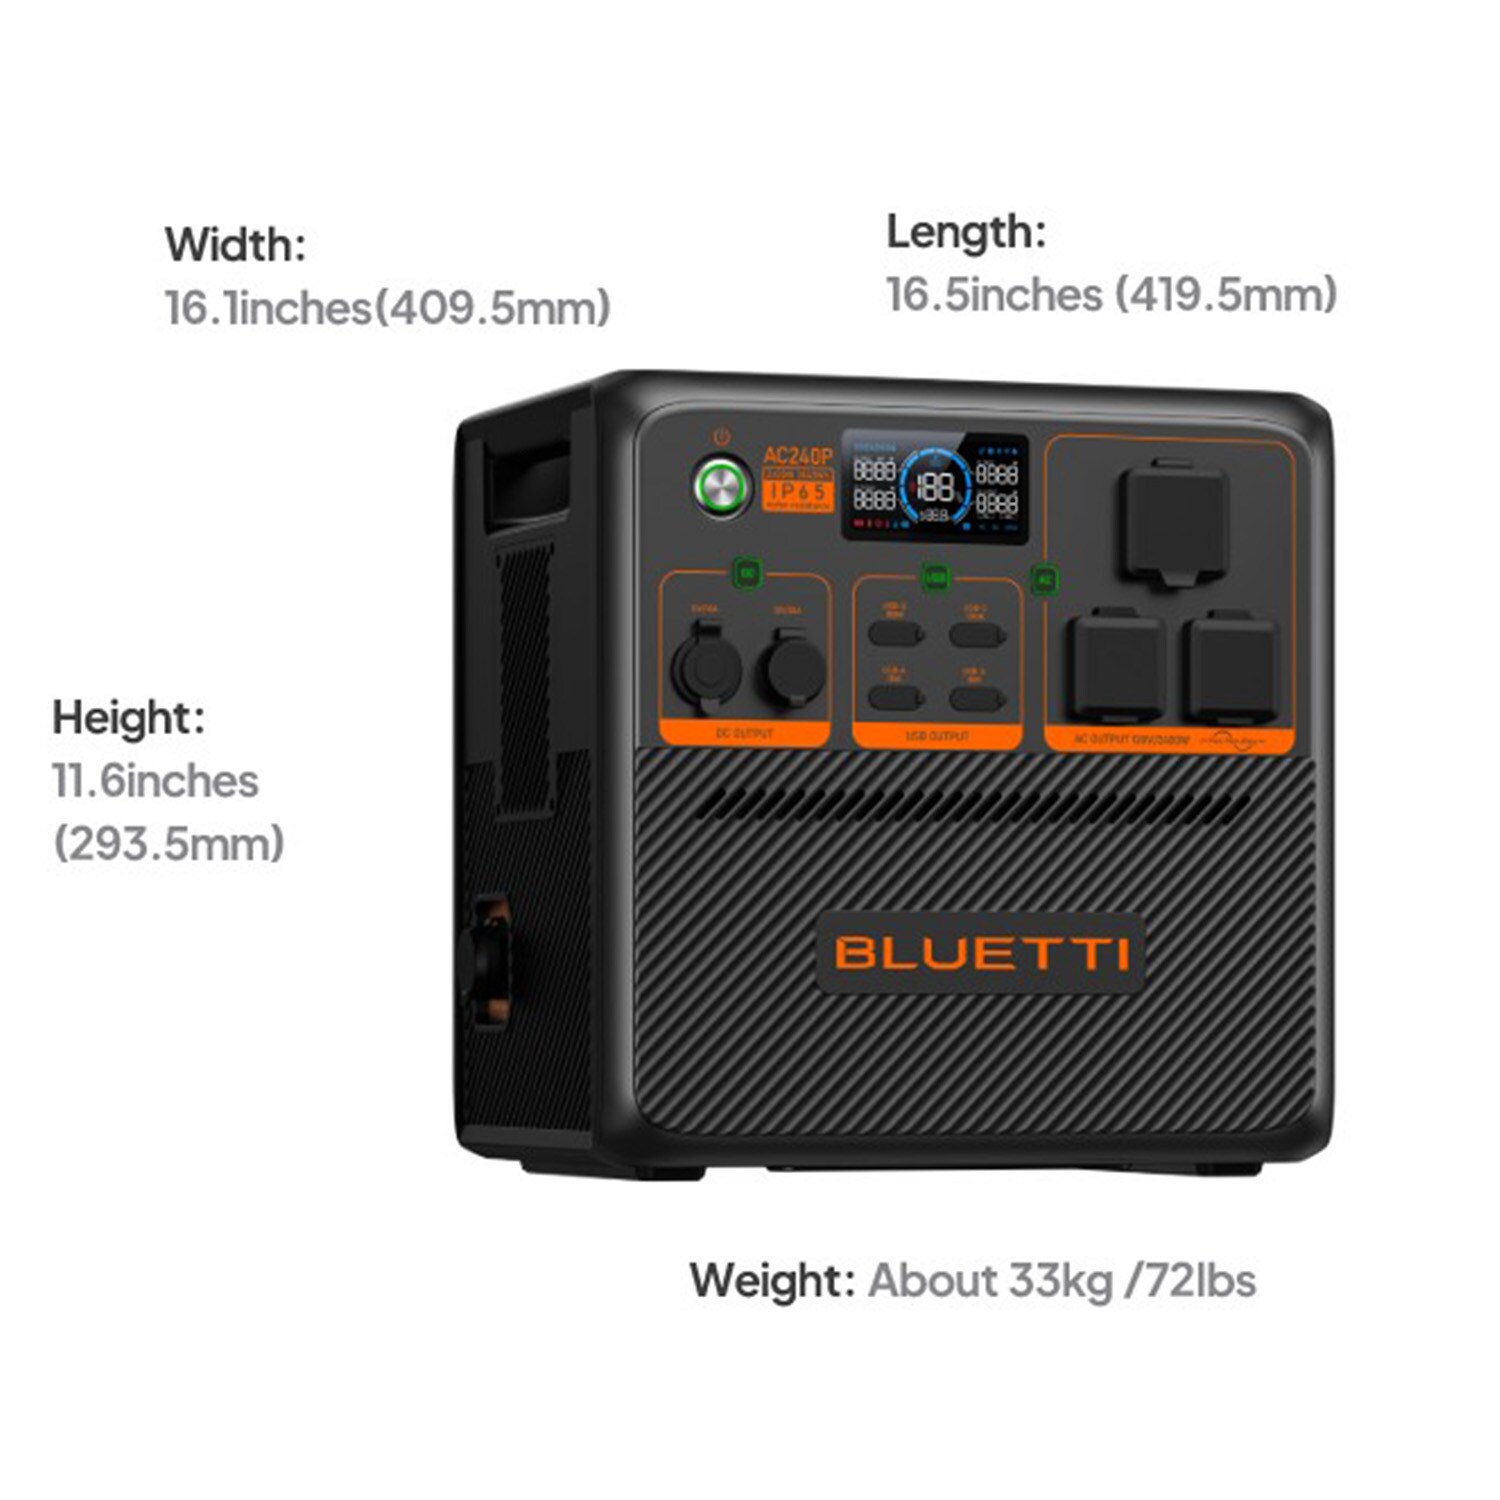 BLUETTI Premium Series 2400-Watt Portable Power Station in the 